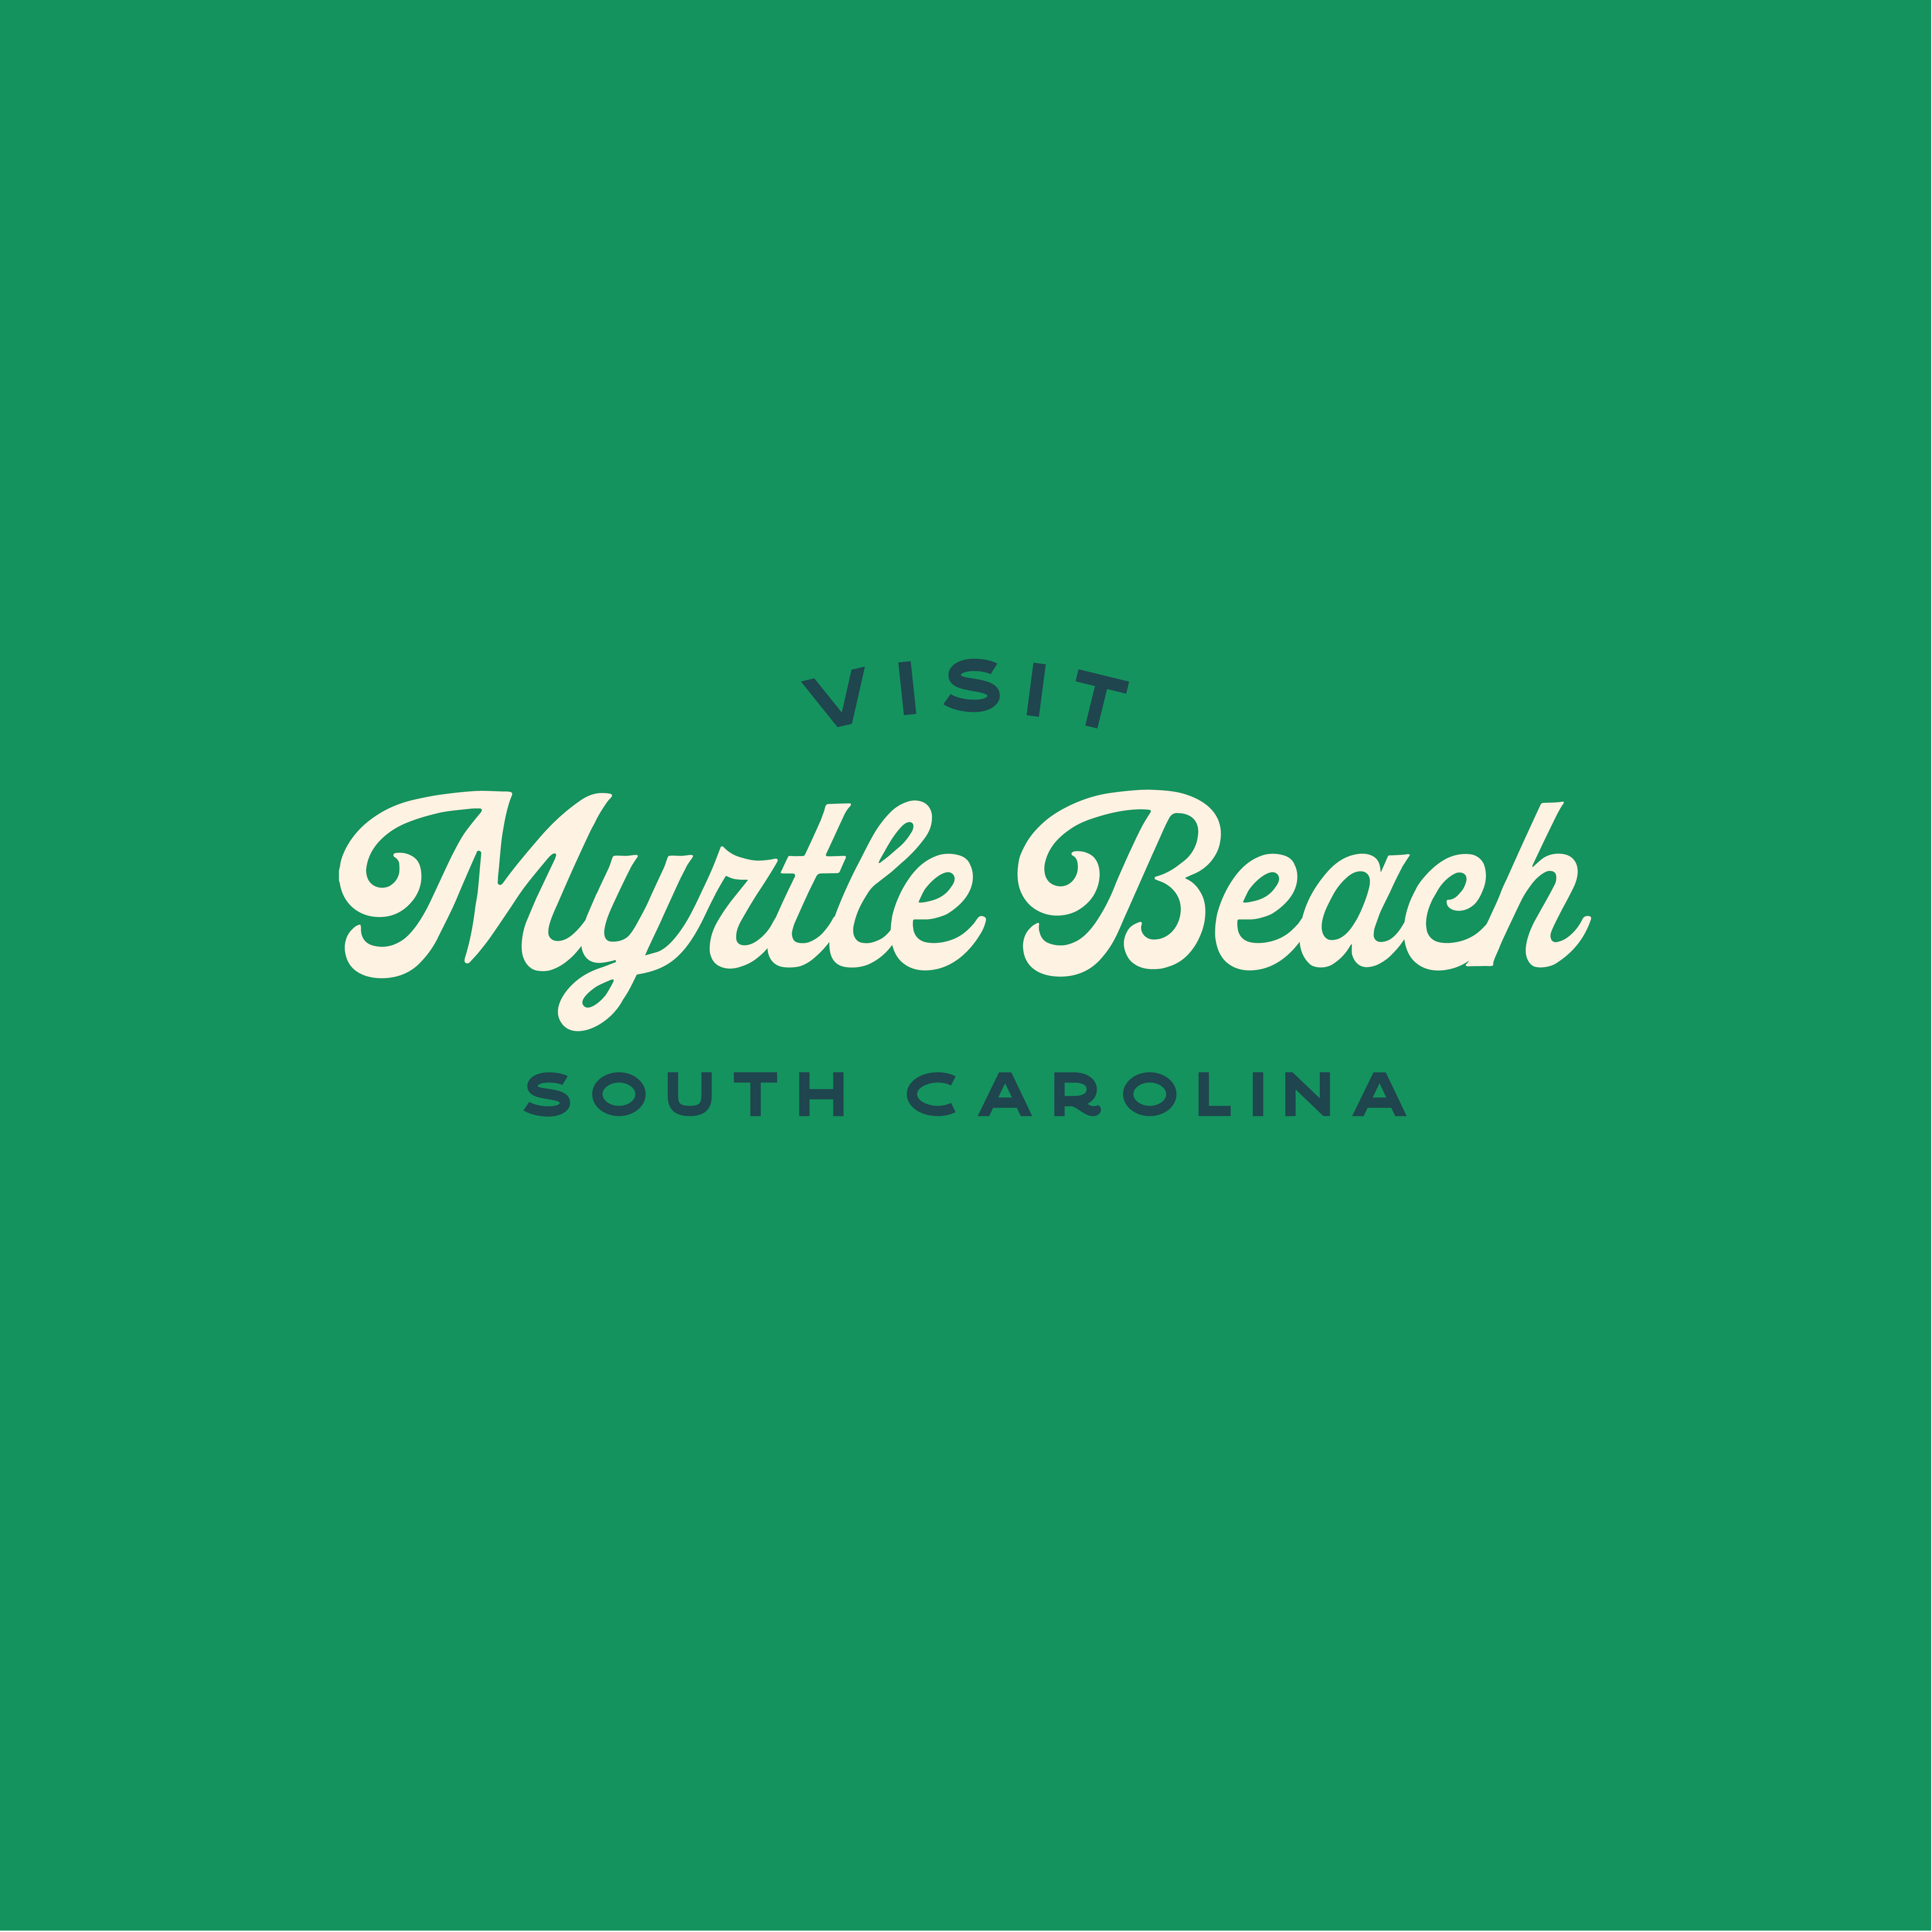 Sponsor Visit Myrtle Beach